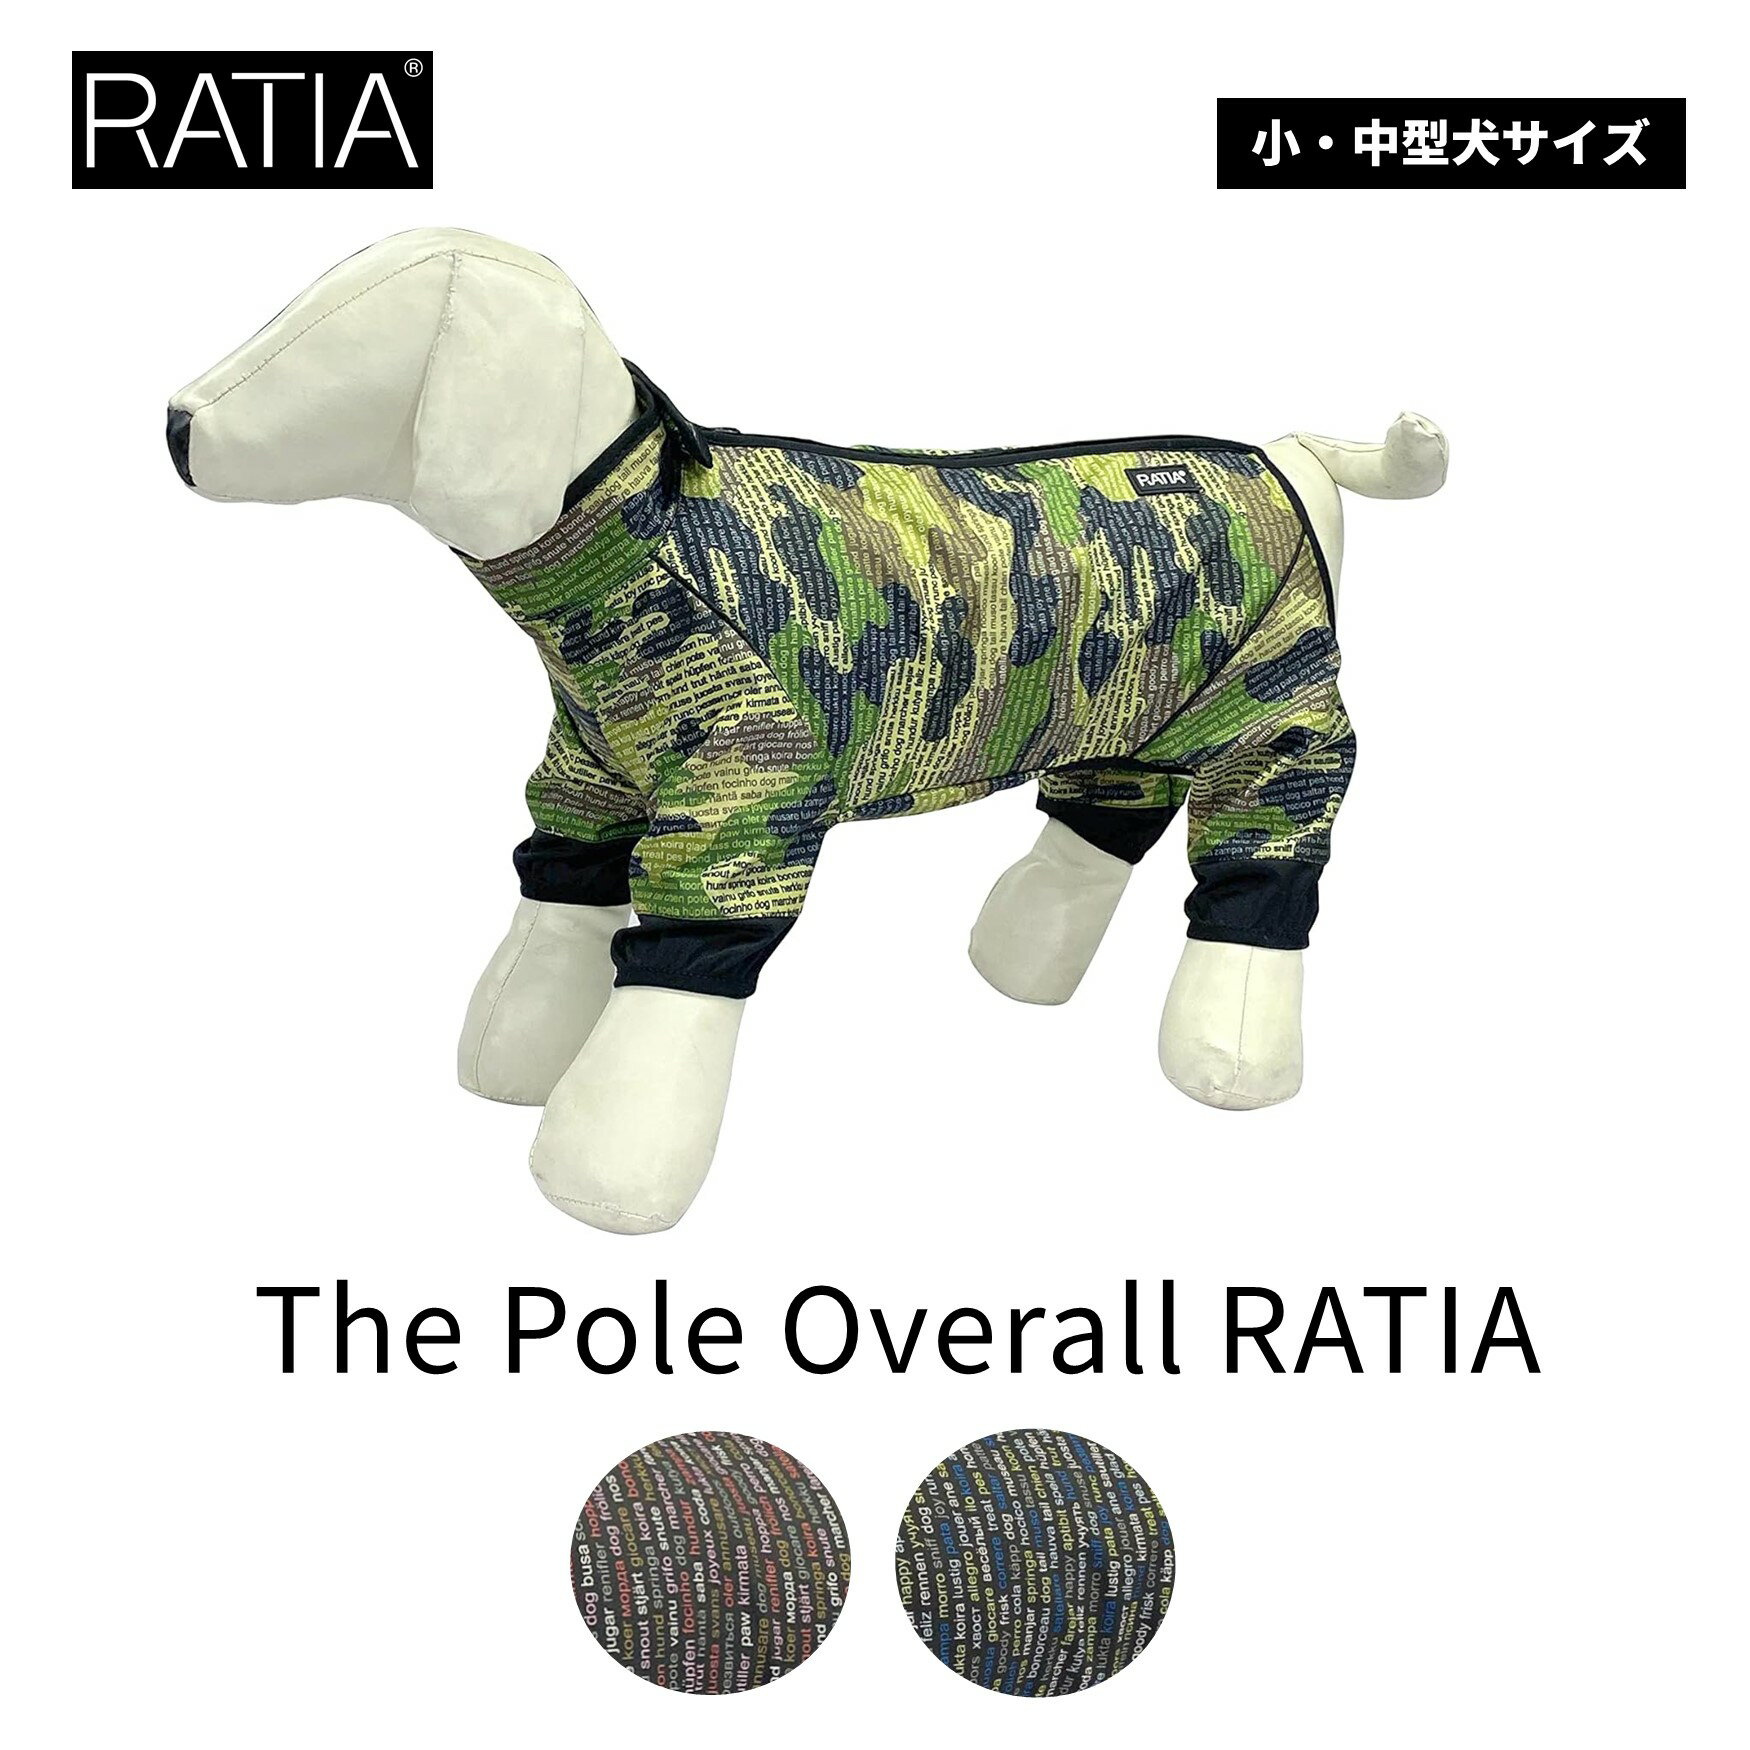 [Ratia/Finland]₷Ē₷I[o[I[yThe Pole Overall RatiazE^pTCY